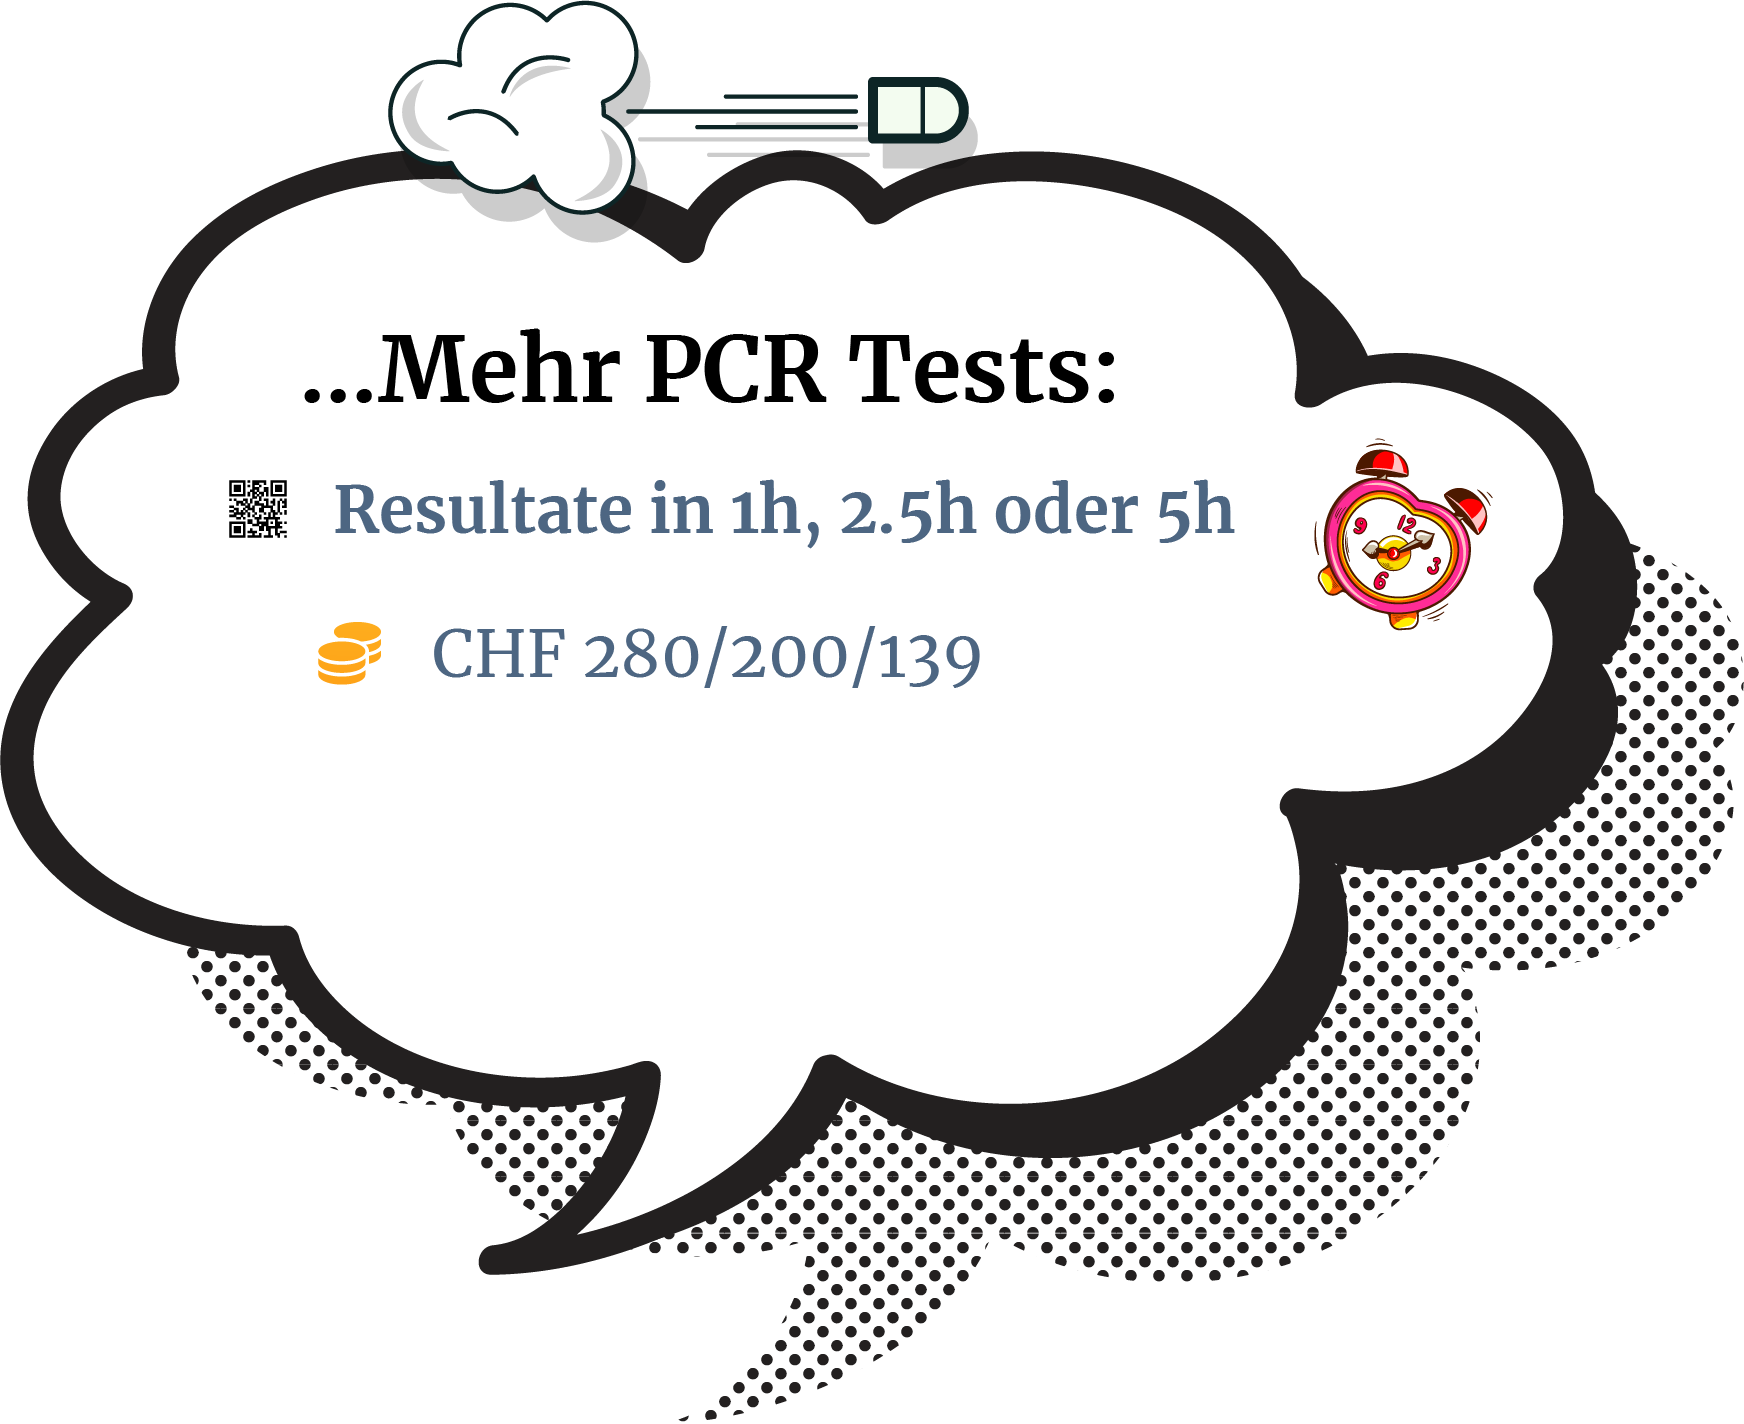 Choose more PCR tests